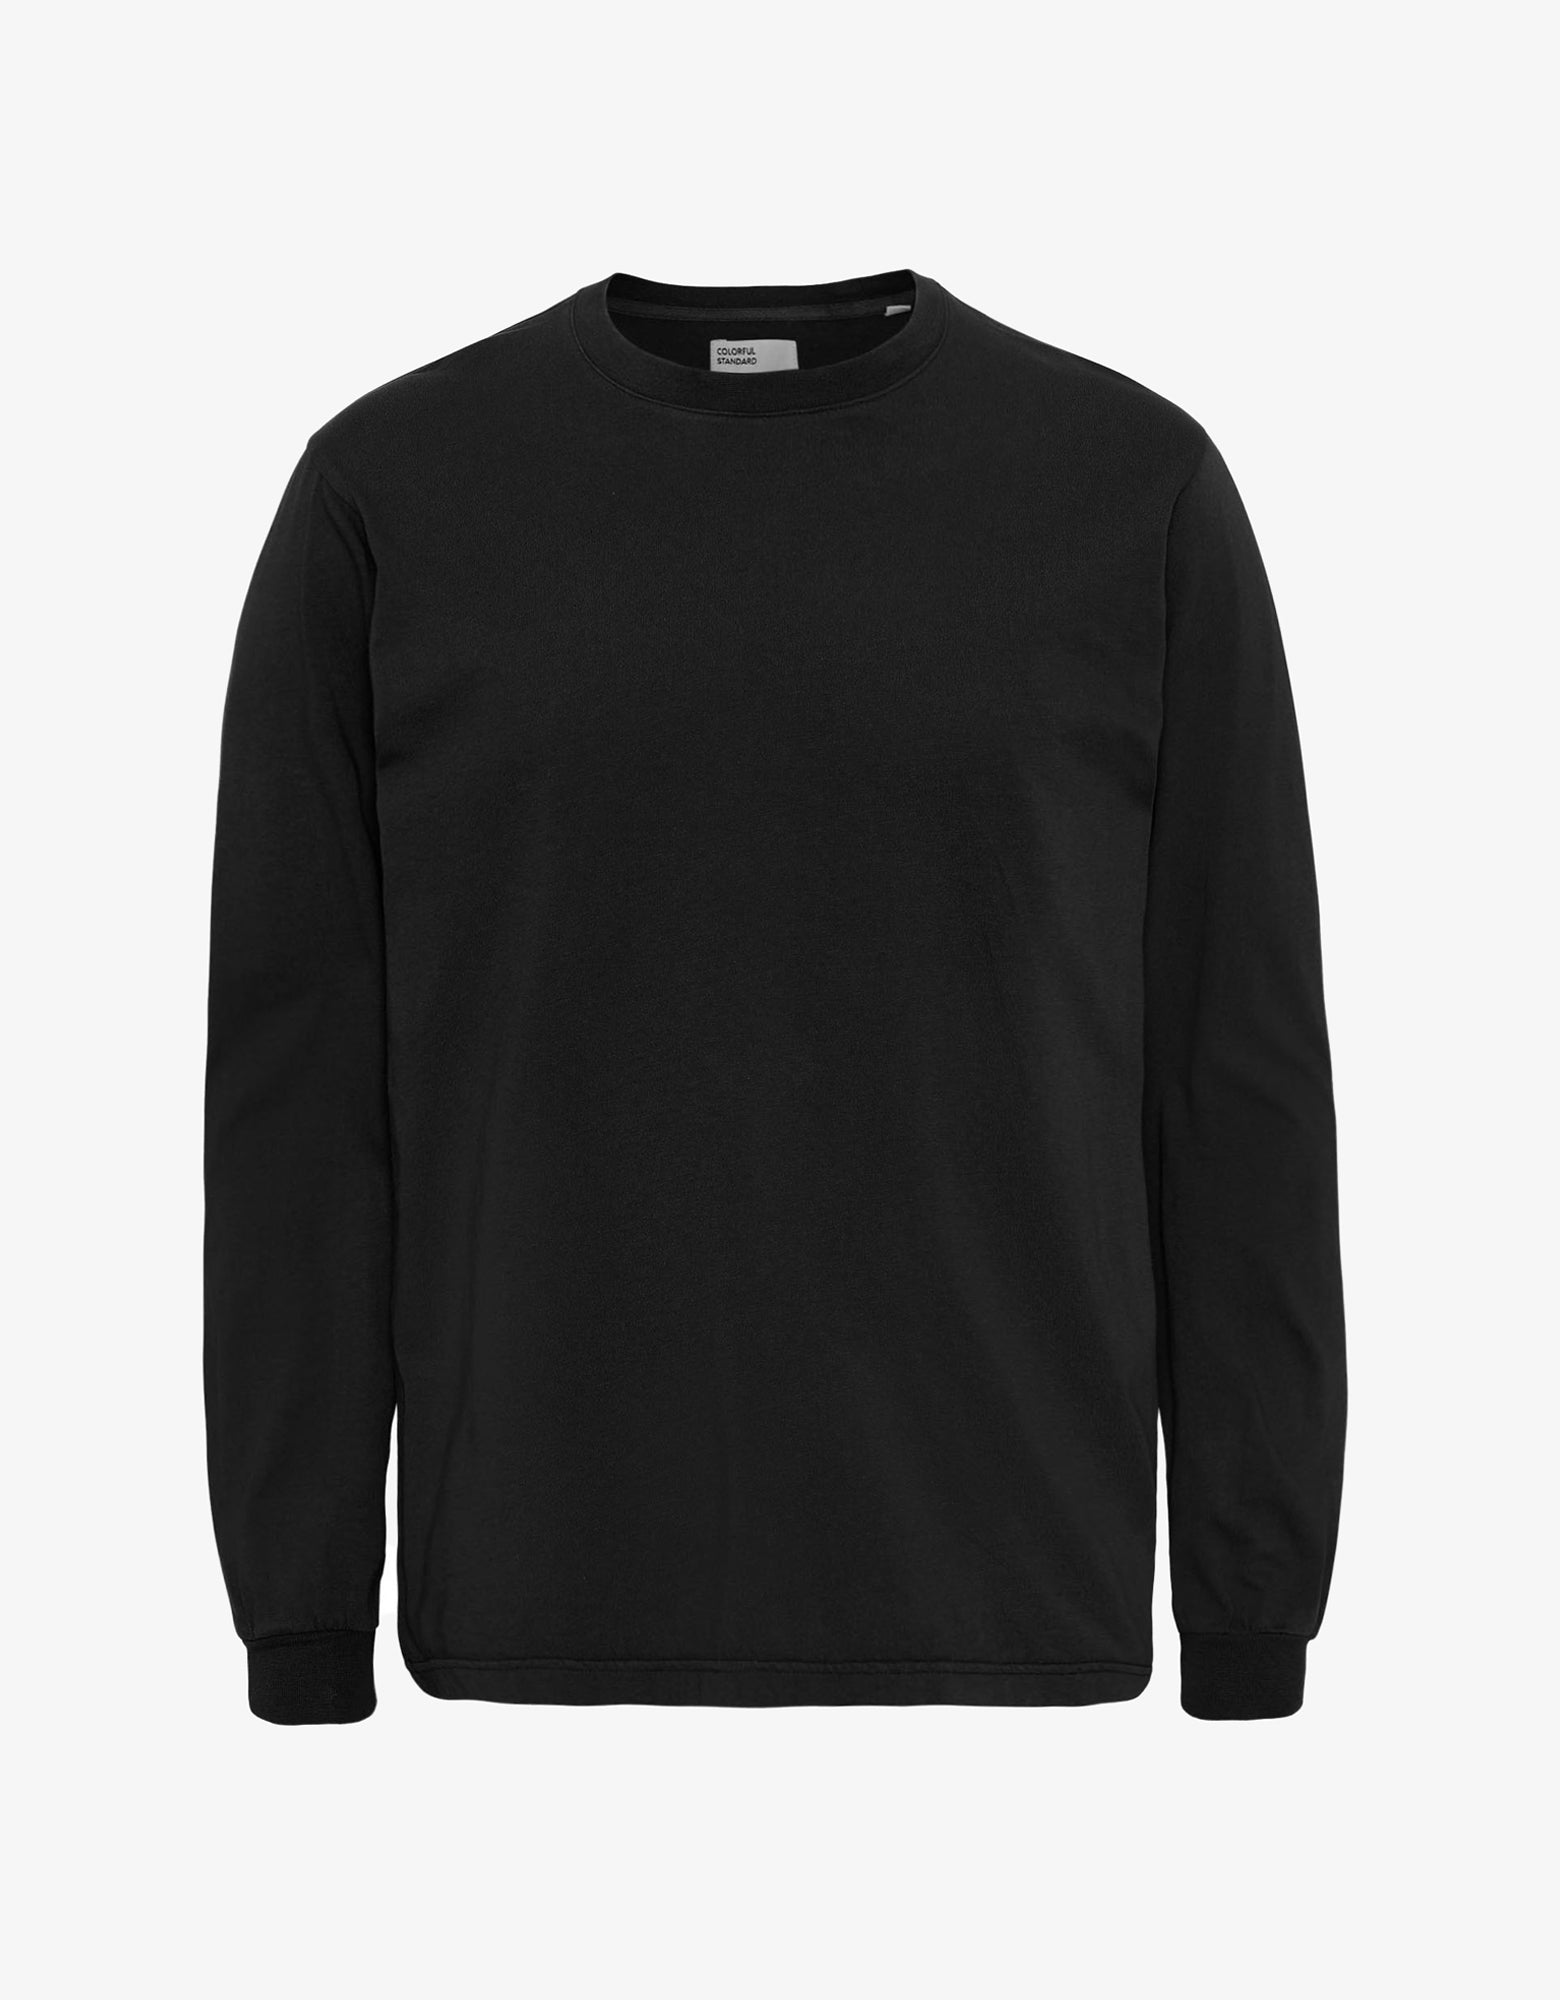 Oversized Organic Long Sleeve Shirt in Black